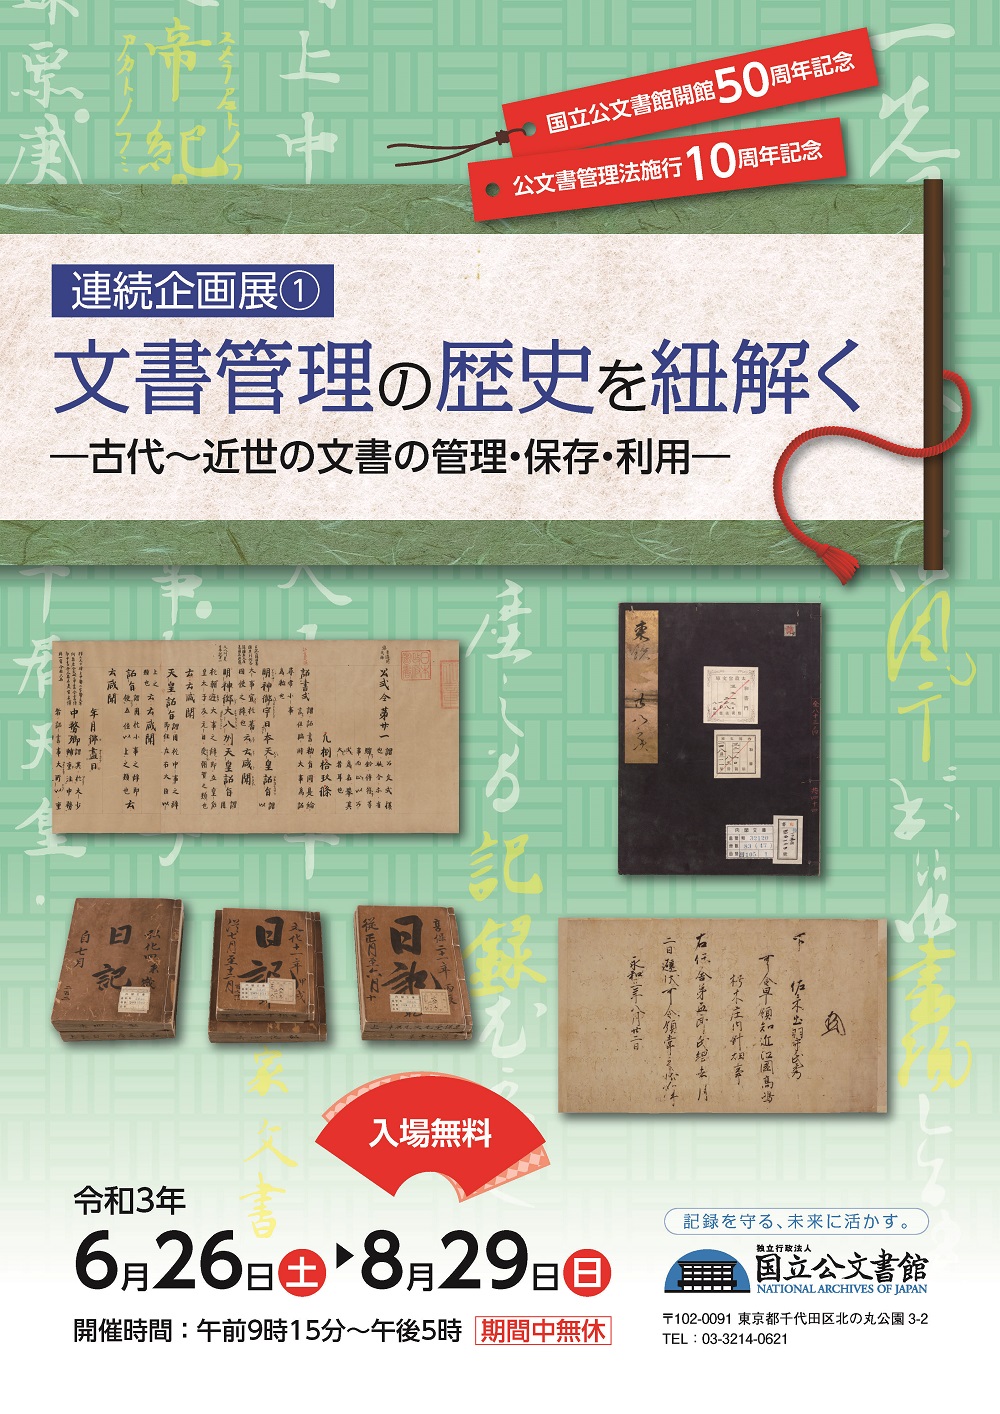  連続企画展(1)「文書管理の歴史を紐解く－古代～近世の文書の管理・保存・利用－」 